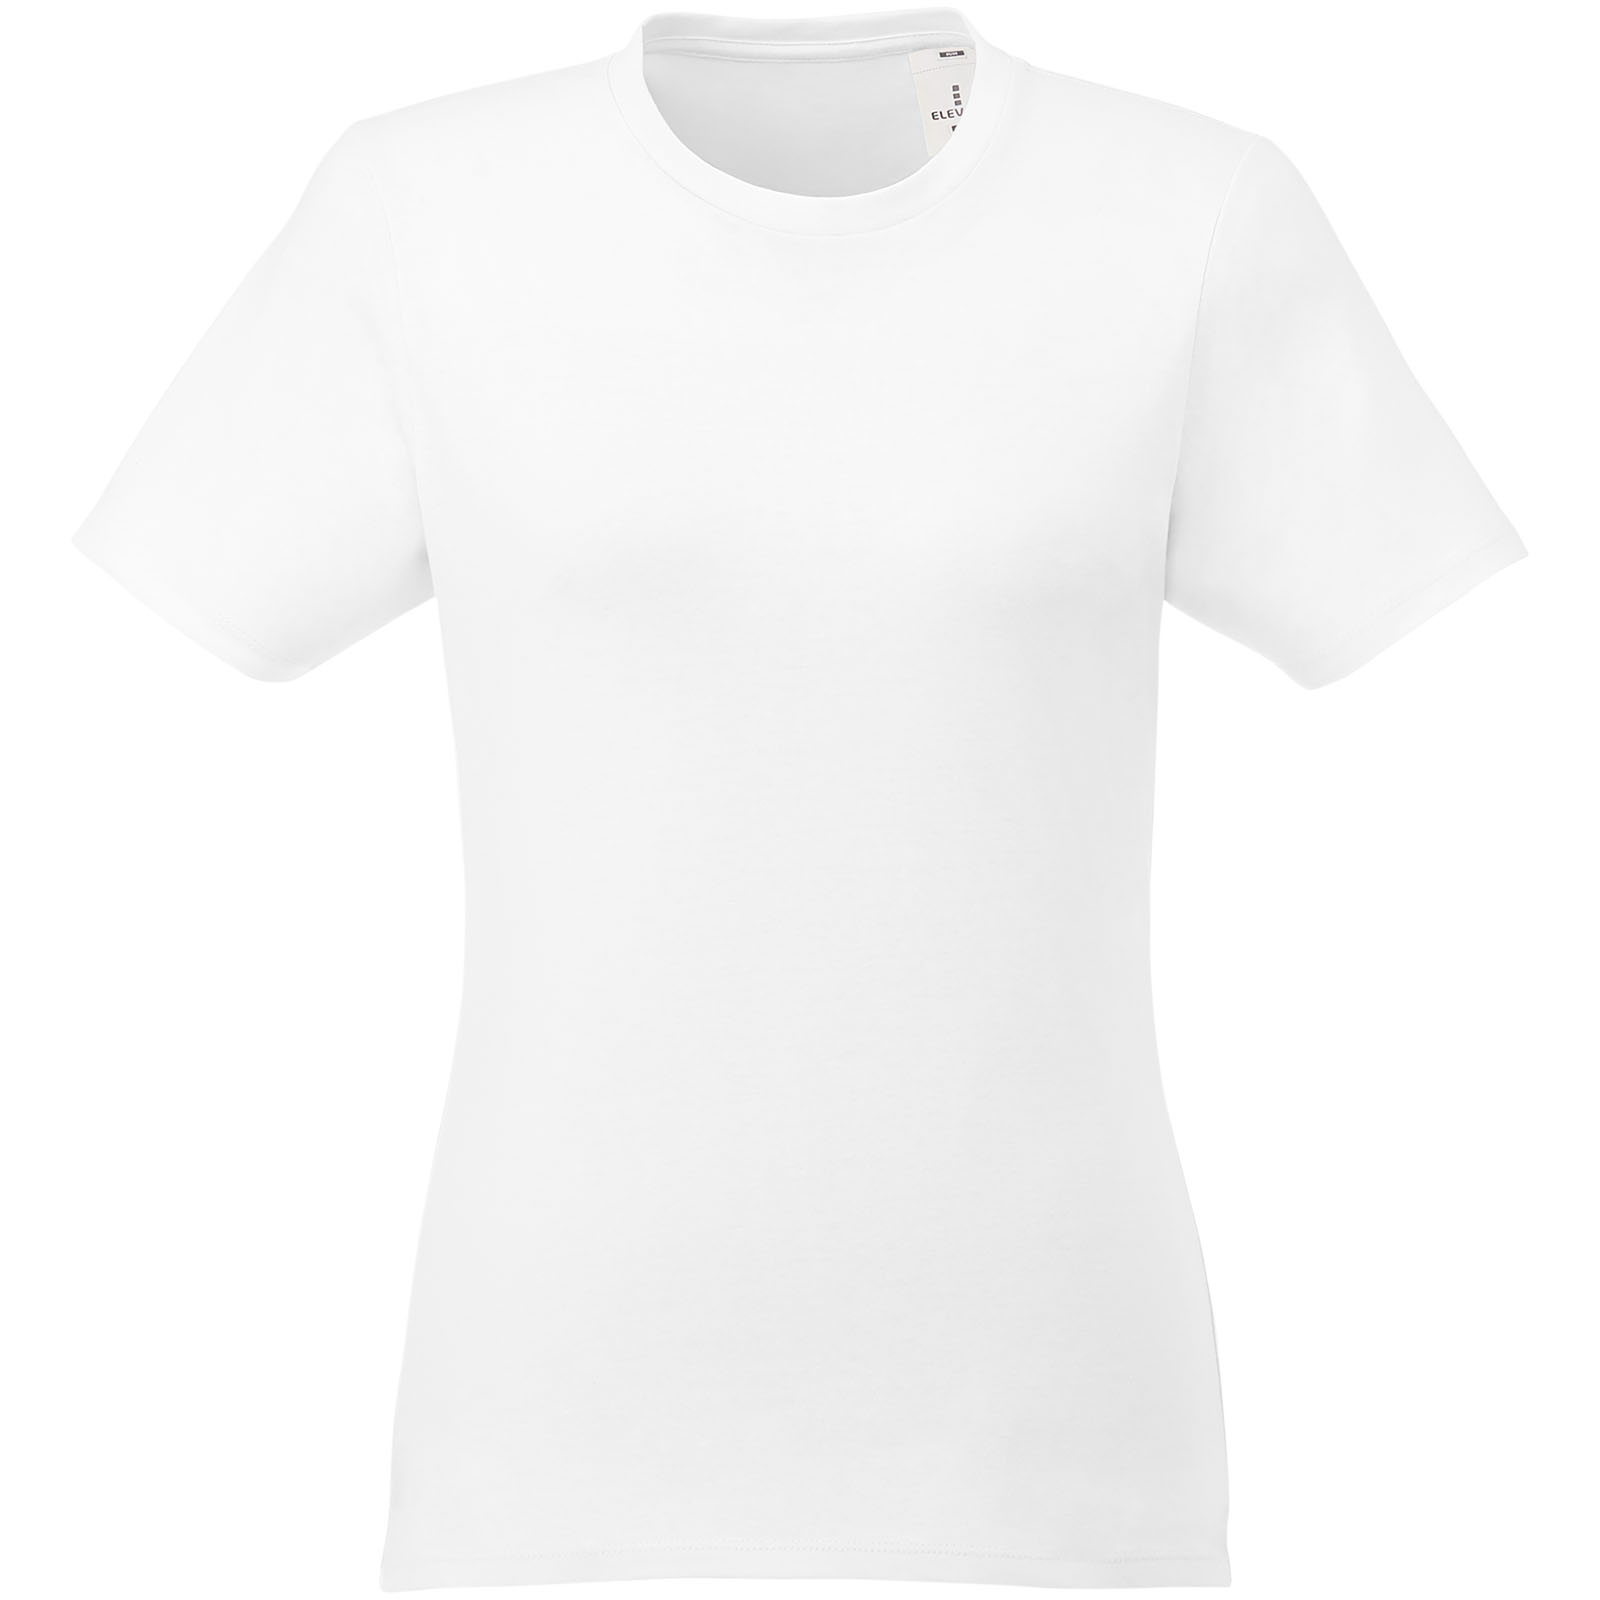 Advertising T-shirts - Heros short sleeve women's t-shirt - 1